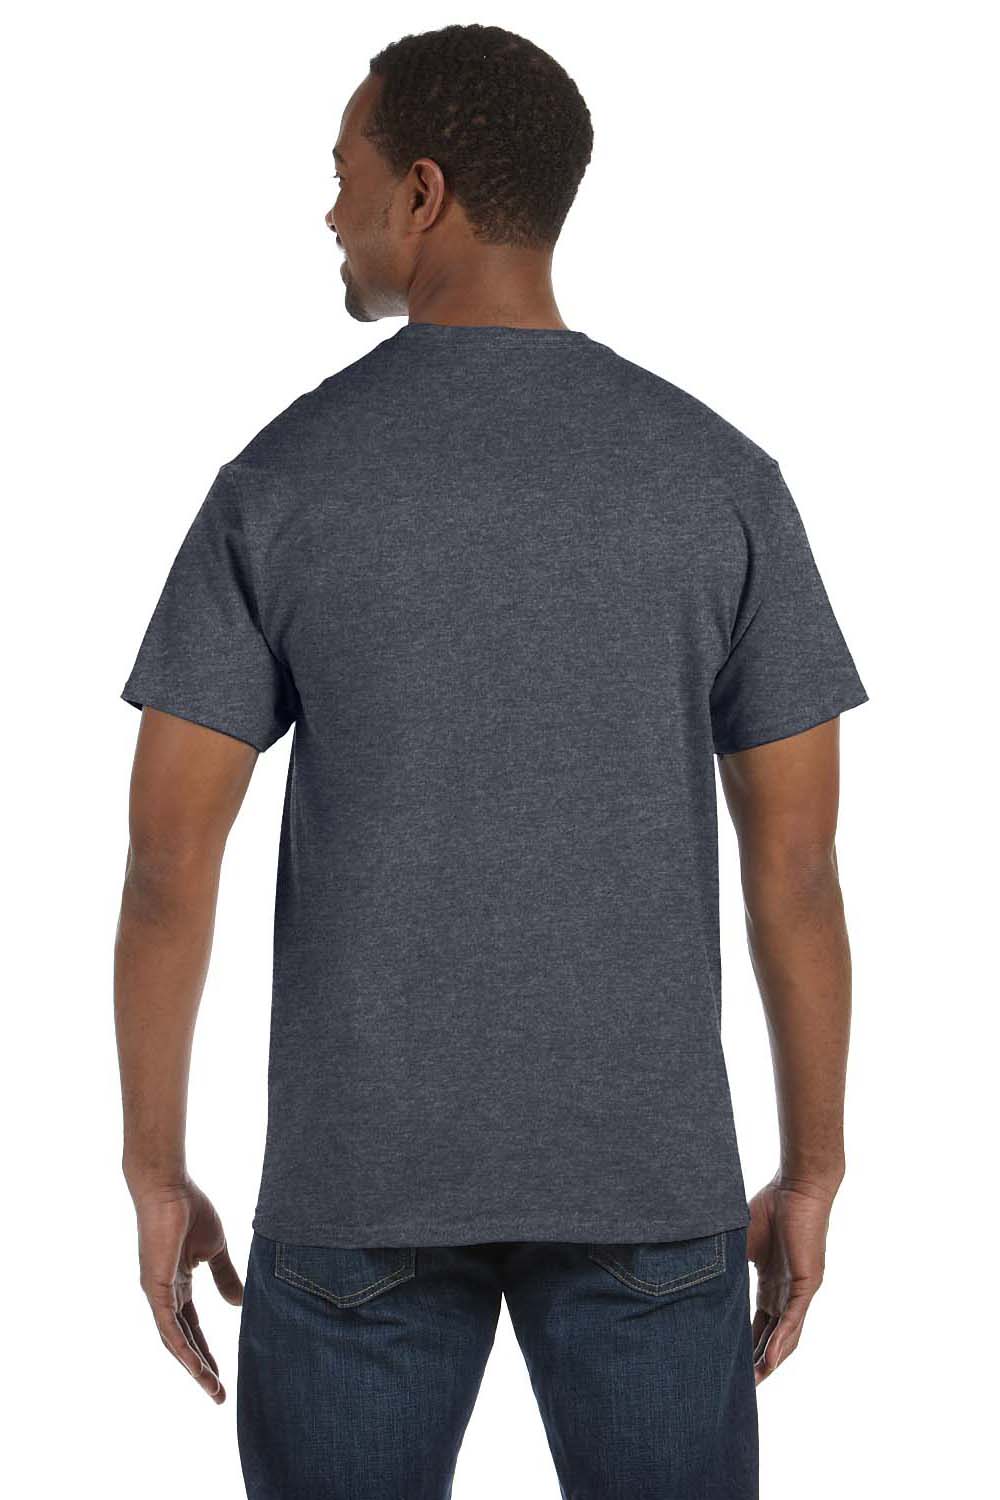 Hanes 5250T Mens ComfortSoft Short Sleeve Crewneck T-Shirt Heather Charcoal Grey Back